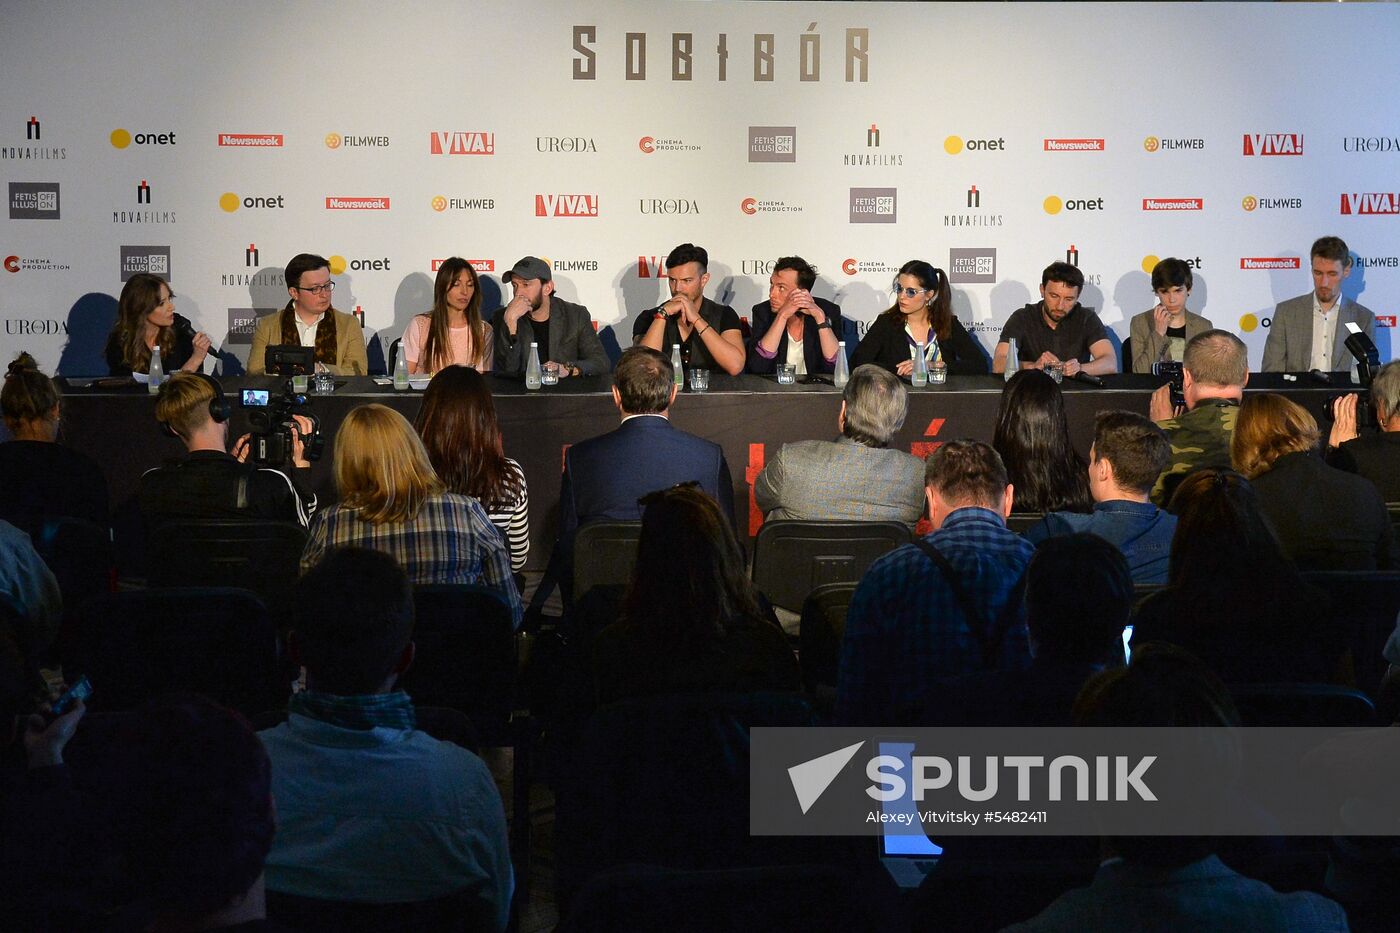 Sobibor international premiere in Warsaw